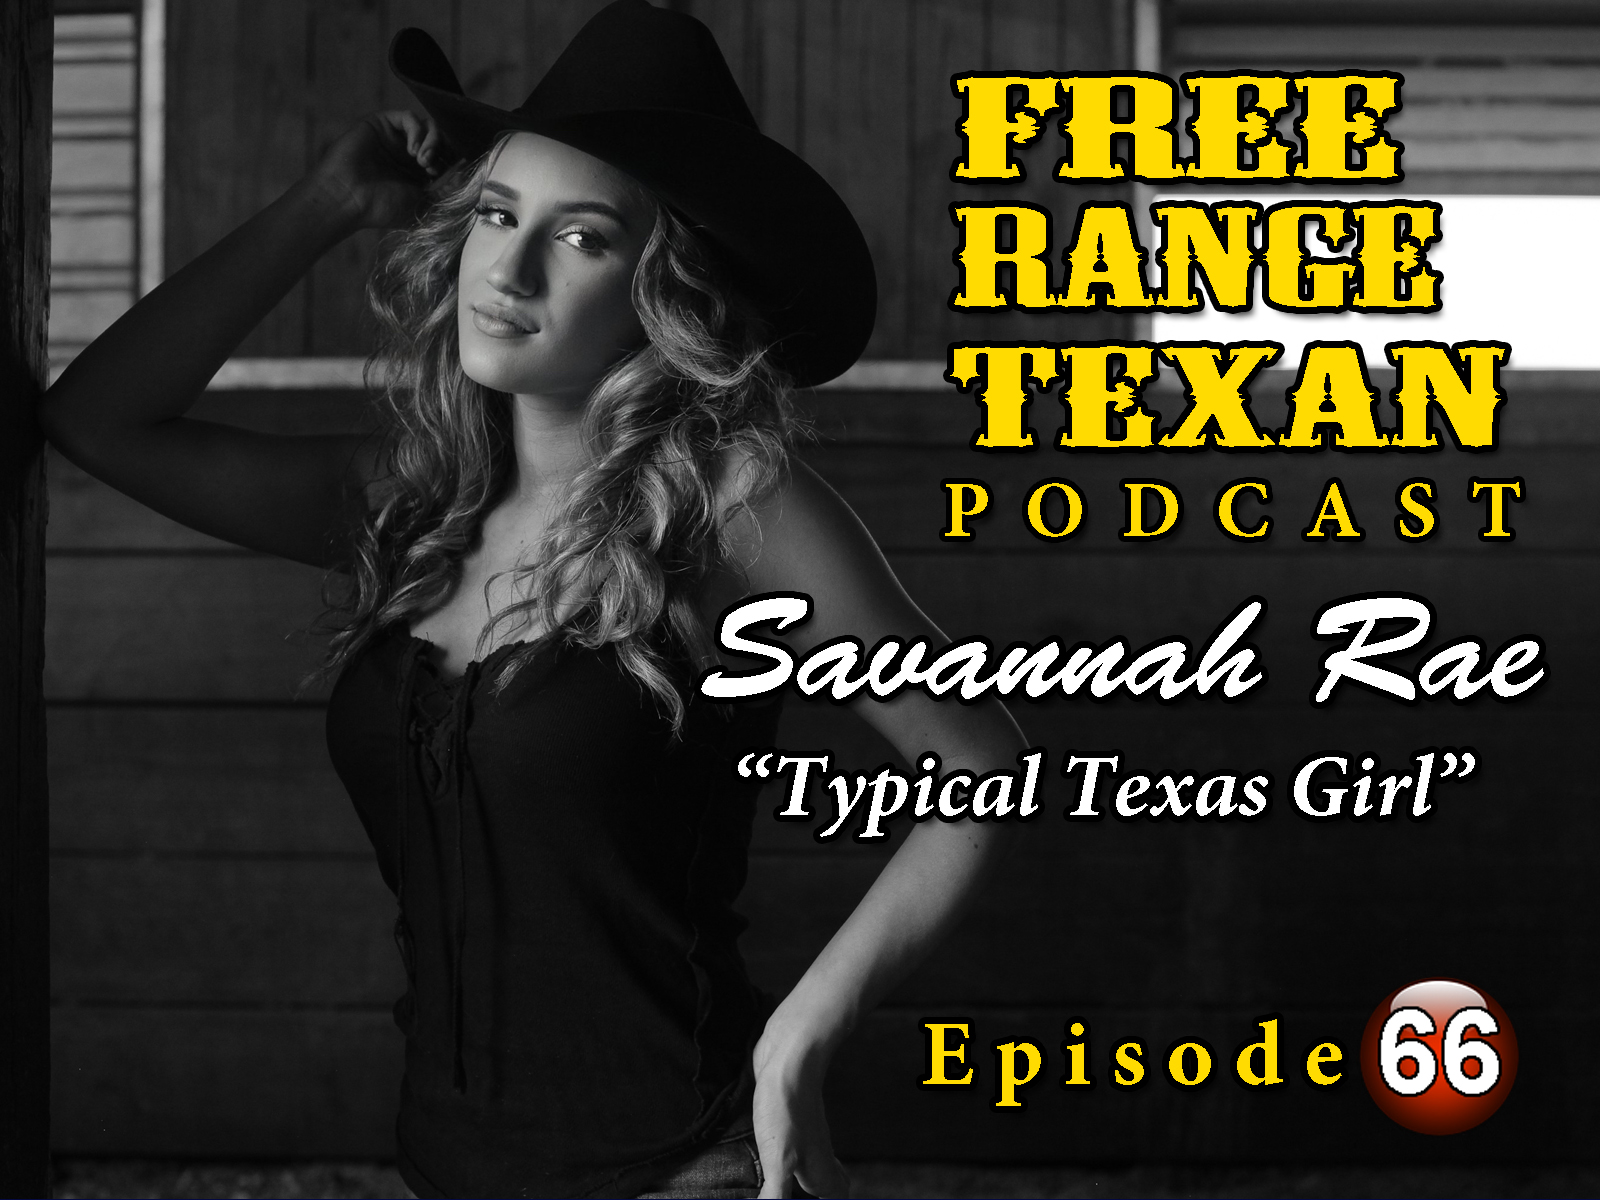 Free Range Texan Podcast Episode 66